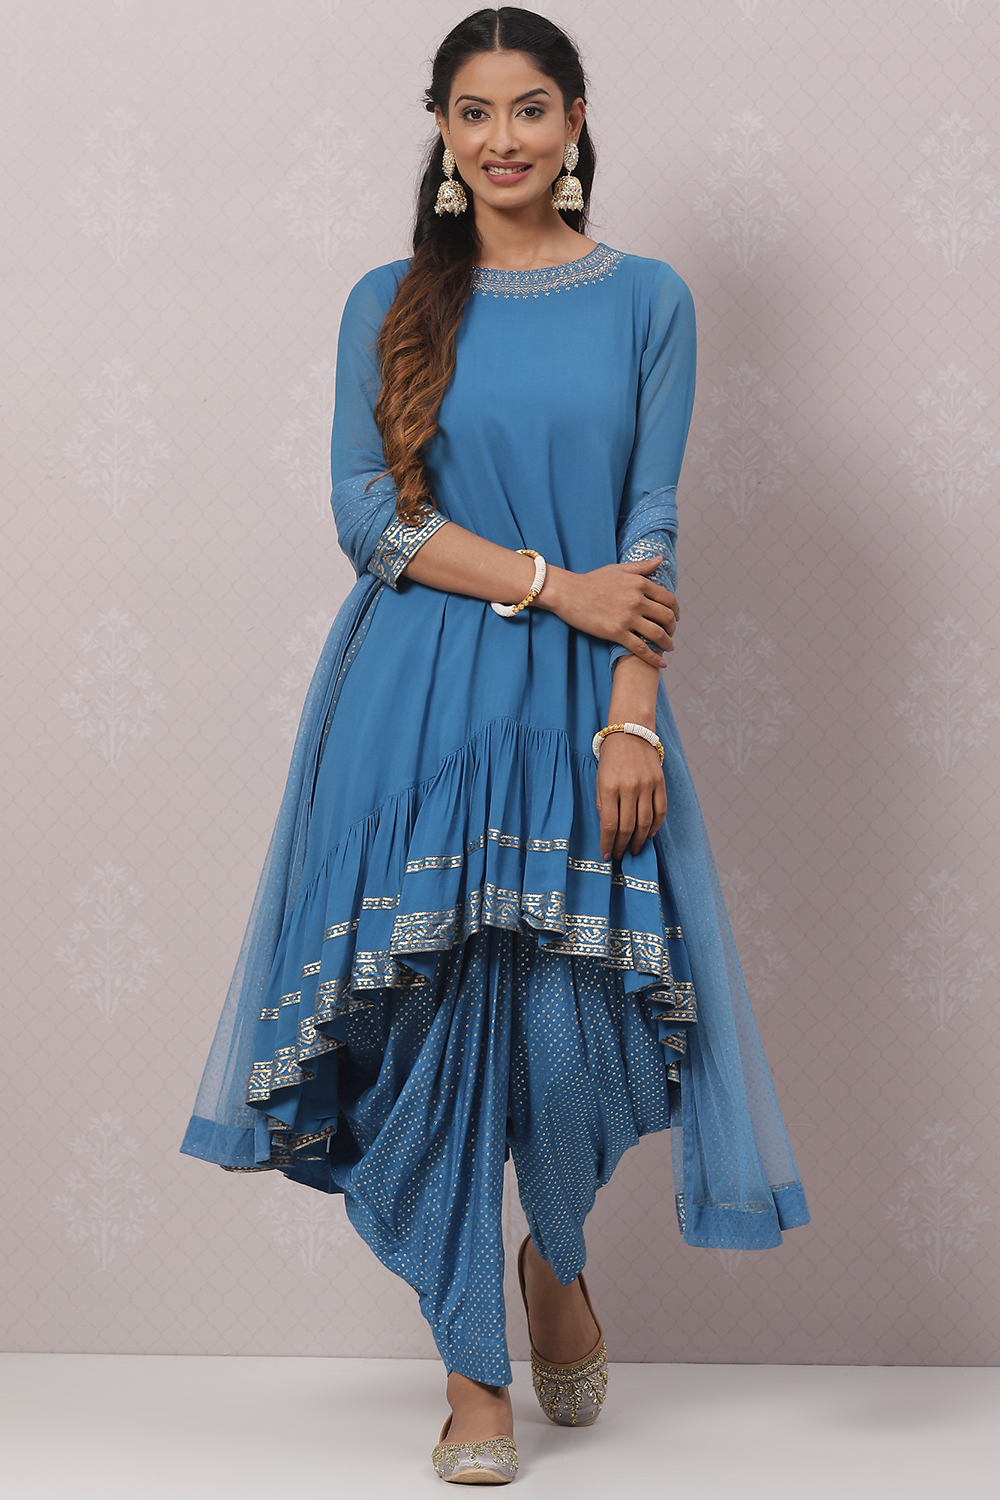 Blue Art Silk Girls Salwar Suit with Pant (NFG-179)